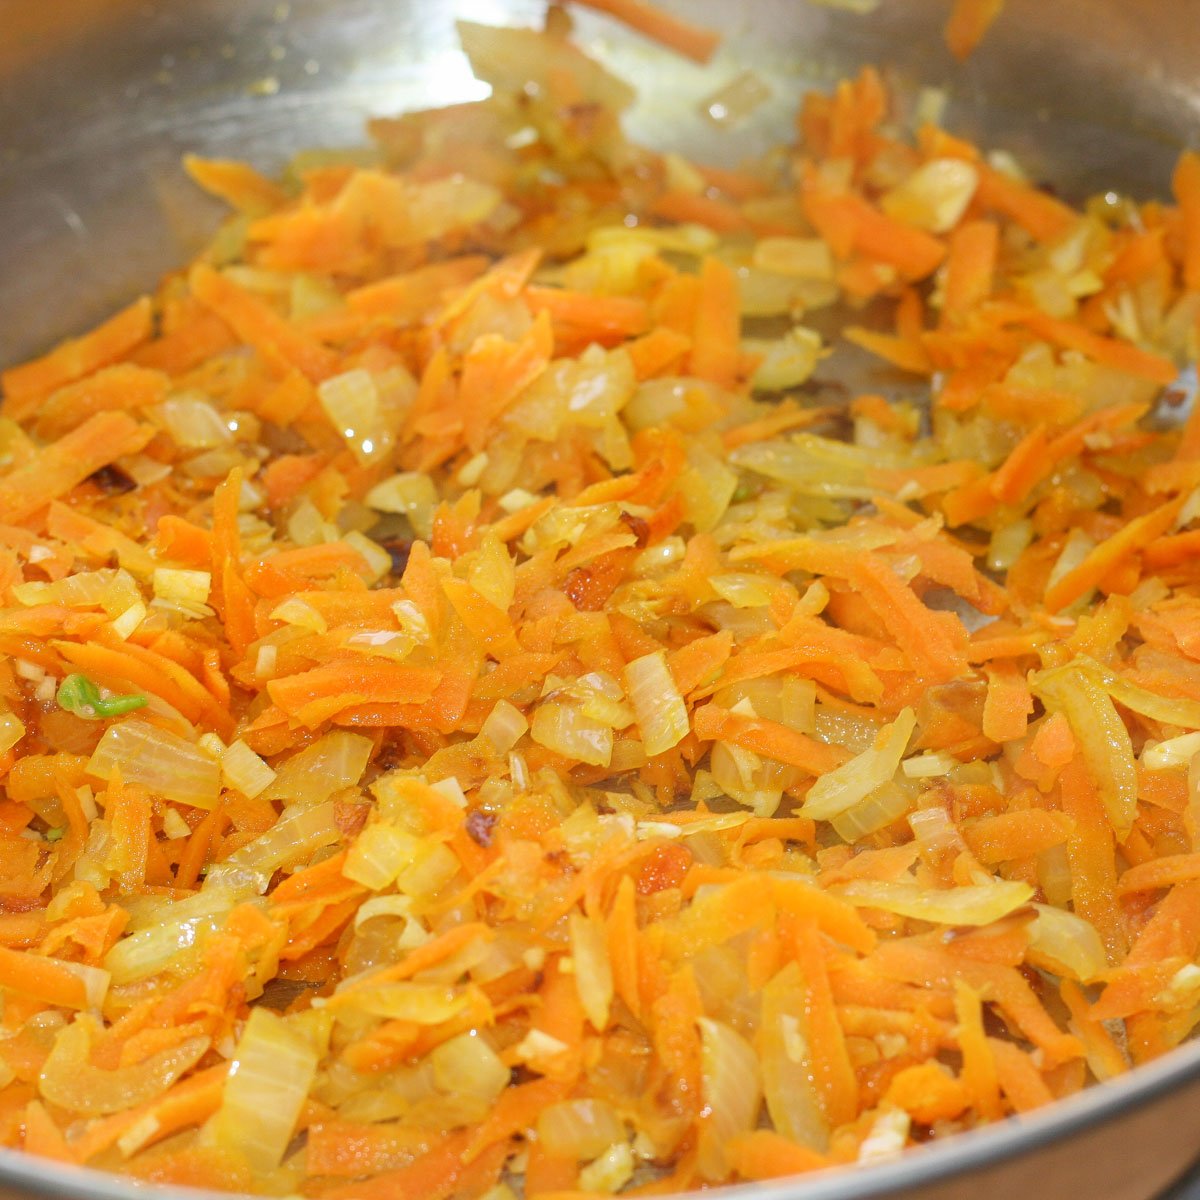 Skillet of sautéed carrots, onion and garlic